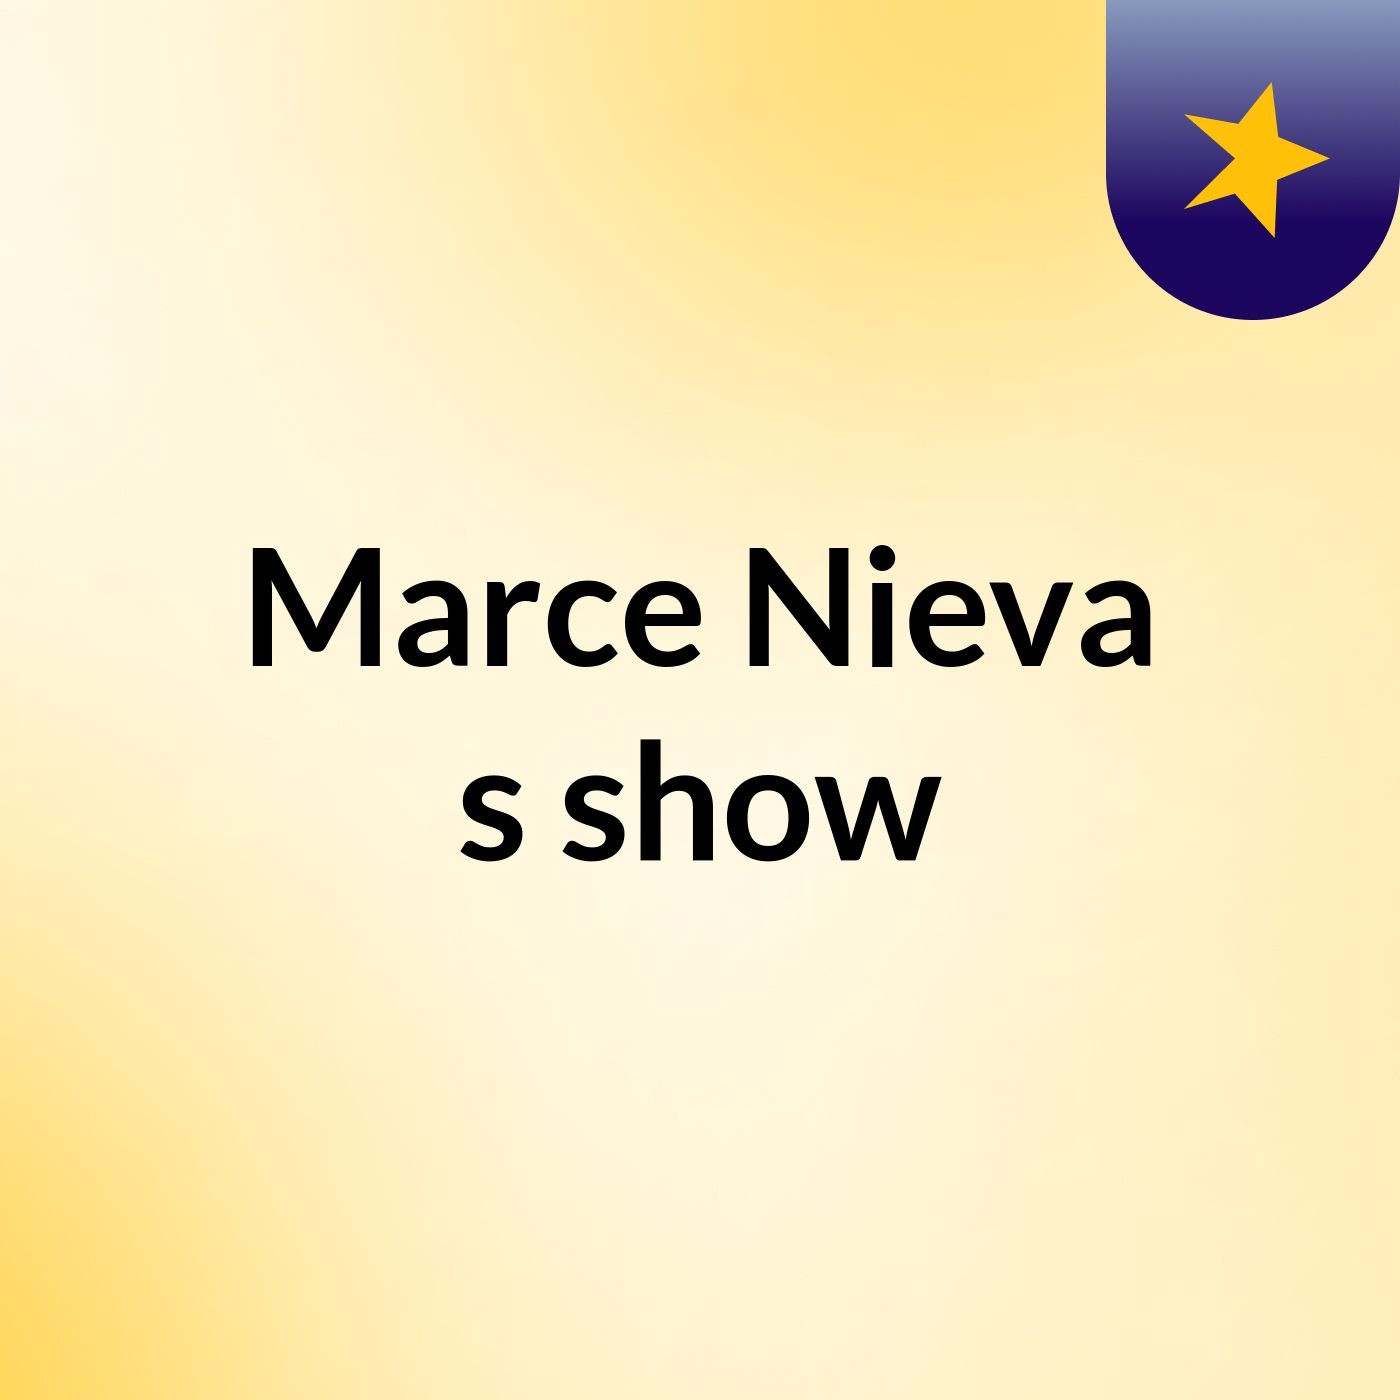 Marce Nieva's show